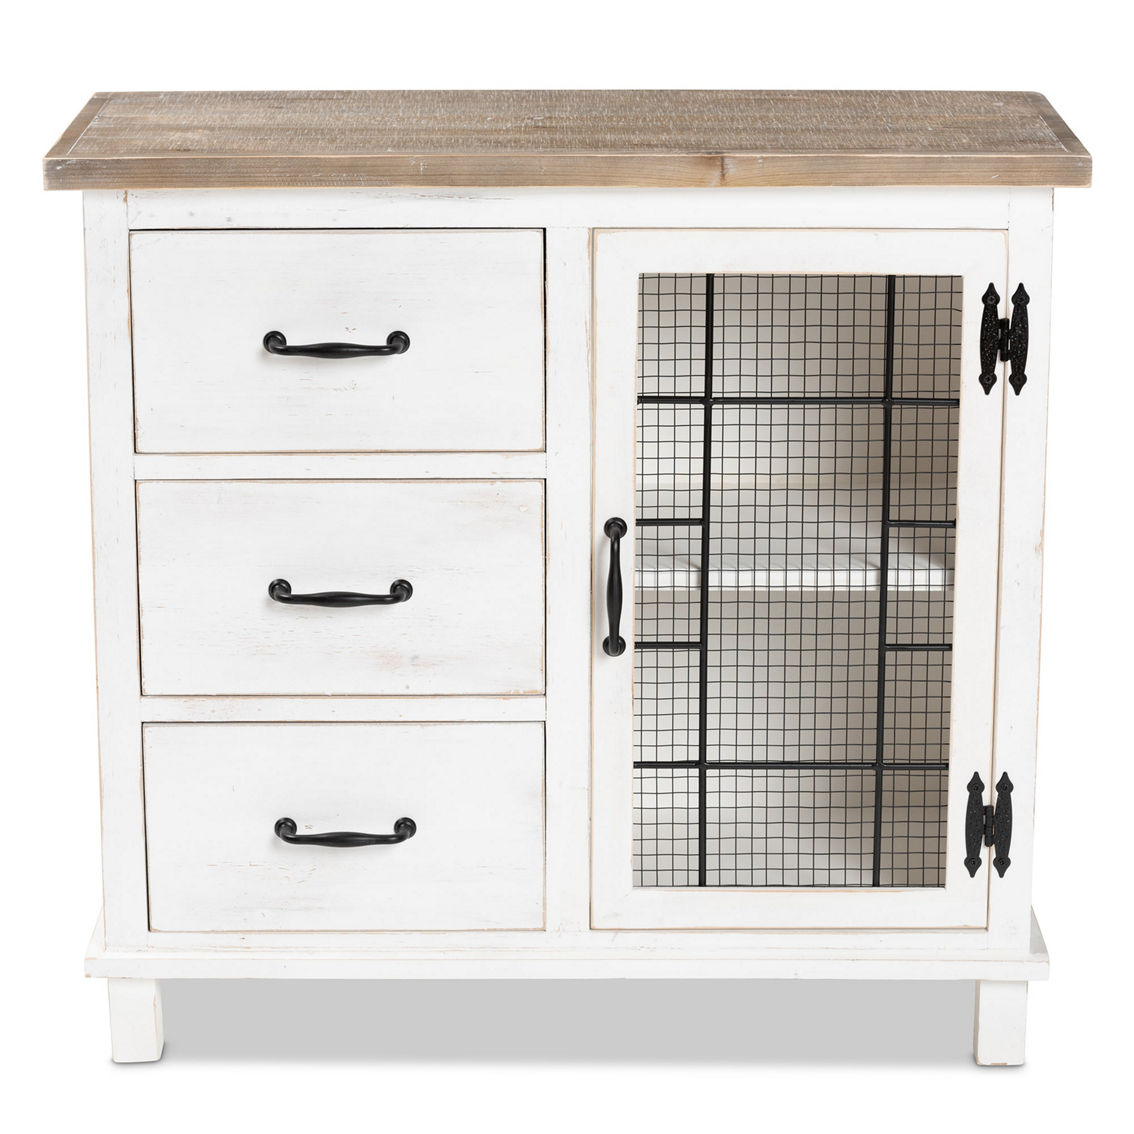 Baxton Studio Faron Distressed White and Oak Brown 3-Drawer Storage Cabinet - Image 3 of 5